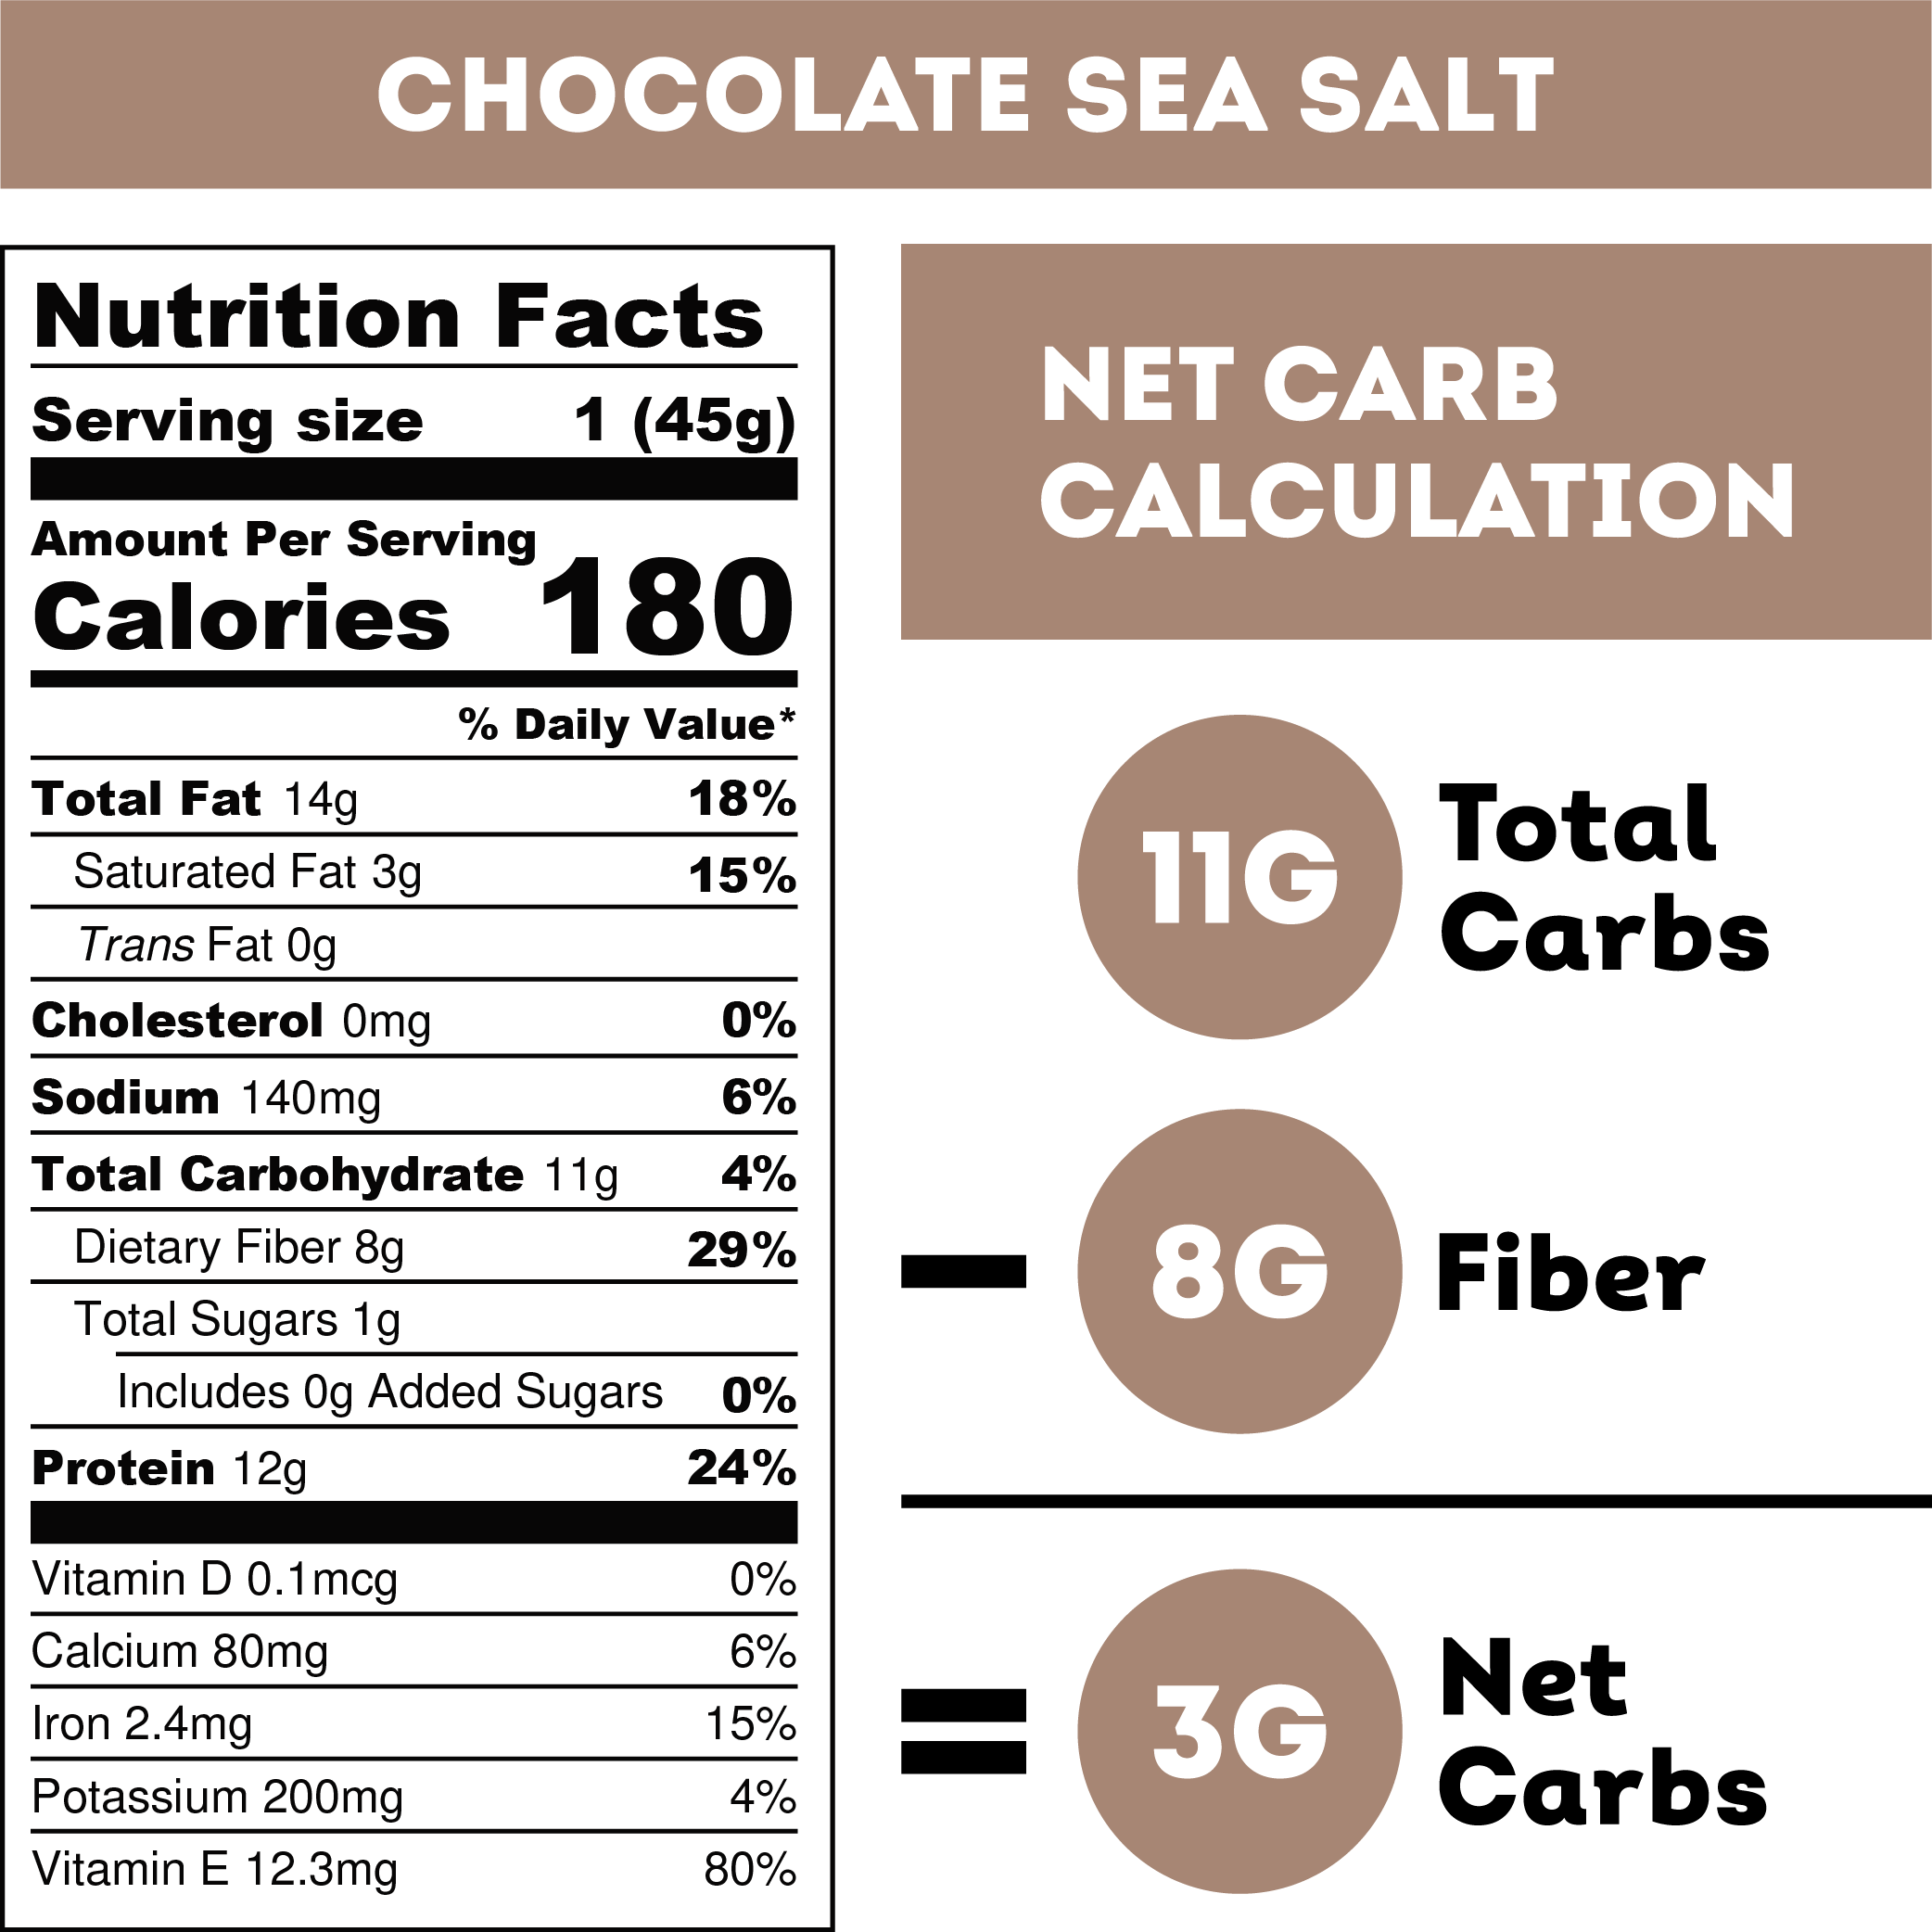 Chocolate Sea Salt Nutrition Facts. Serving Size: 1 (45 grams). Amount Per Serving. Calories: 180. % Daily Value. Total Fat: 14 grams, 18%. Saturated Fat: 3 grams, 15%. Trans Fat: 0 grams. Cholesterol: 0 milligrams, 0%. Sodium: 140 milligrams, 6%. Total Carbohydrate: 11 grams, 4%. Dietary Fiber: 8 grams, 29%. Total Sugars: 1 gram. Includes: 0 grams Added Sugars, 0%. Protein: 12 grams, 24%. Vitamin D: 0.1 micrograms, 0%. Calcium: 80 milligrams, 6%. Iron: 2.4 milligrams, 15%. Potassium: 200 milligrams, 4%. Vitamin E: 12.3 milligrams, 80%.